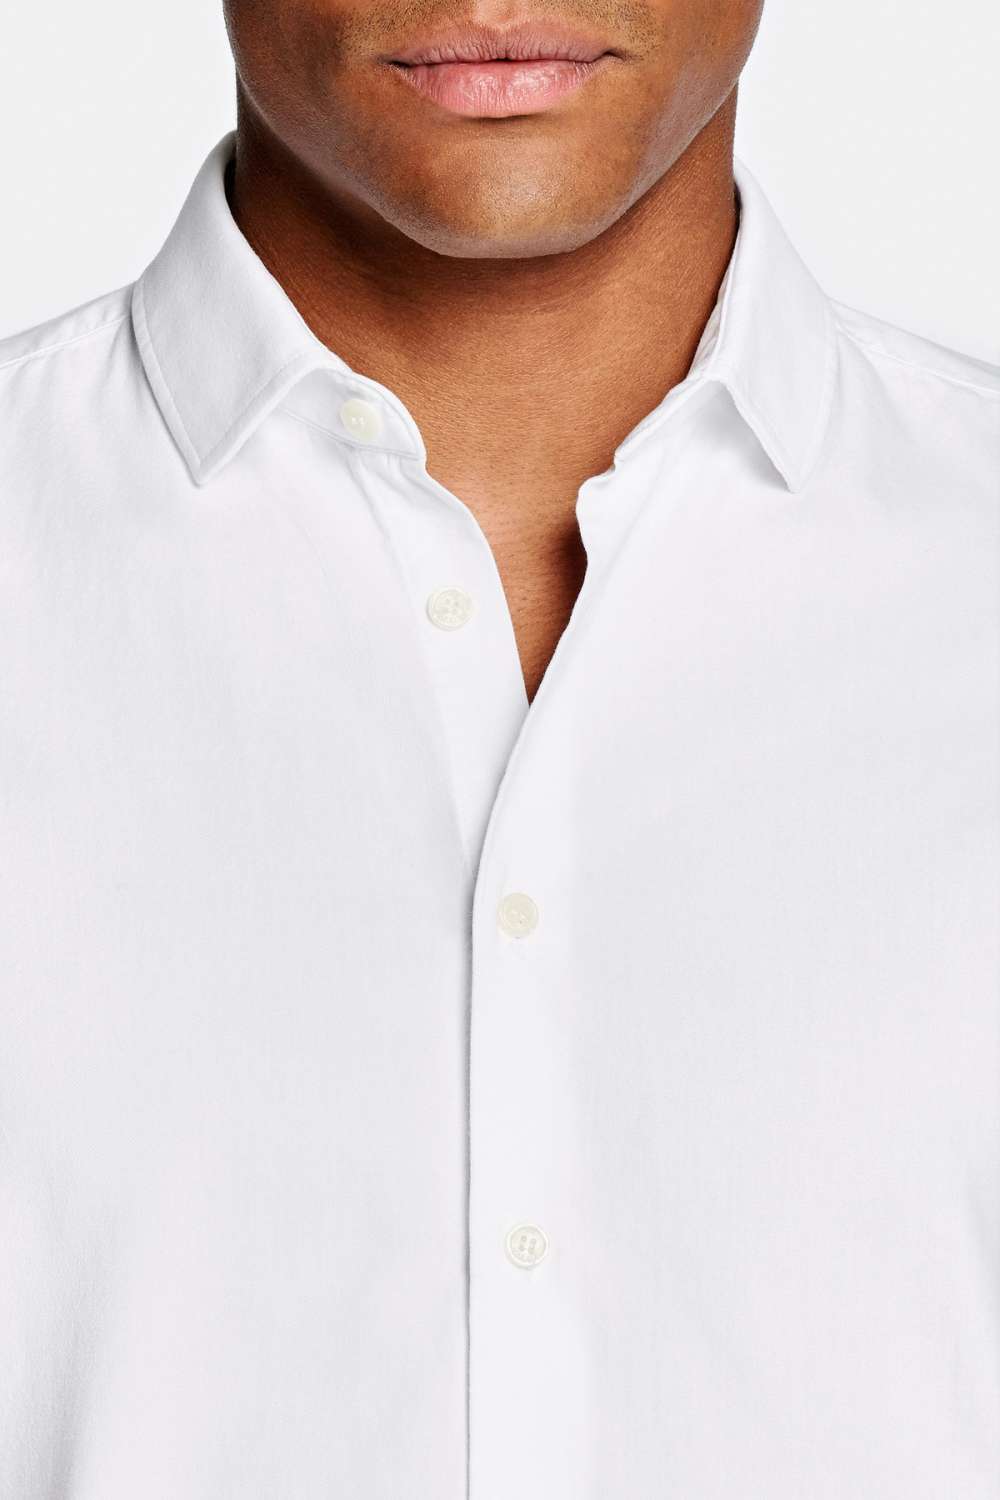 Wimbledons * The Cotton Shirt